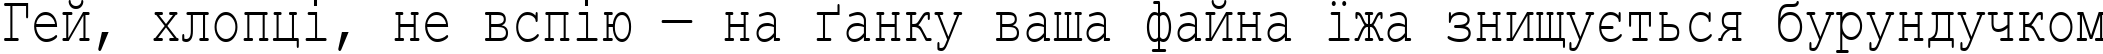 Пример написания шрифтом Courier New Cyr_75n текста на украинском